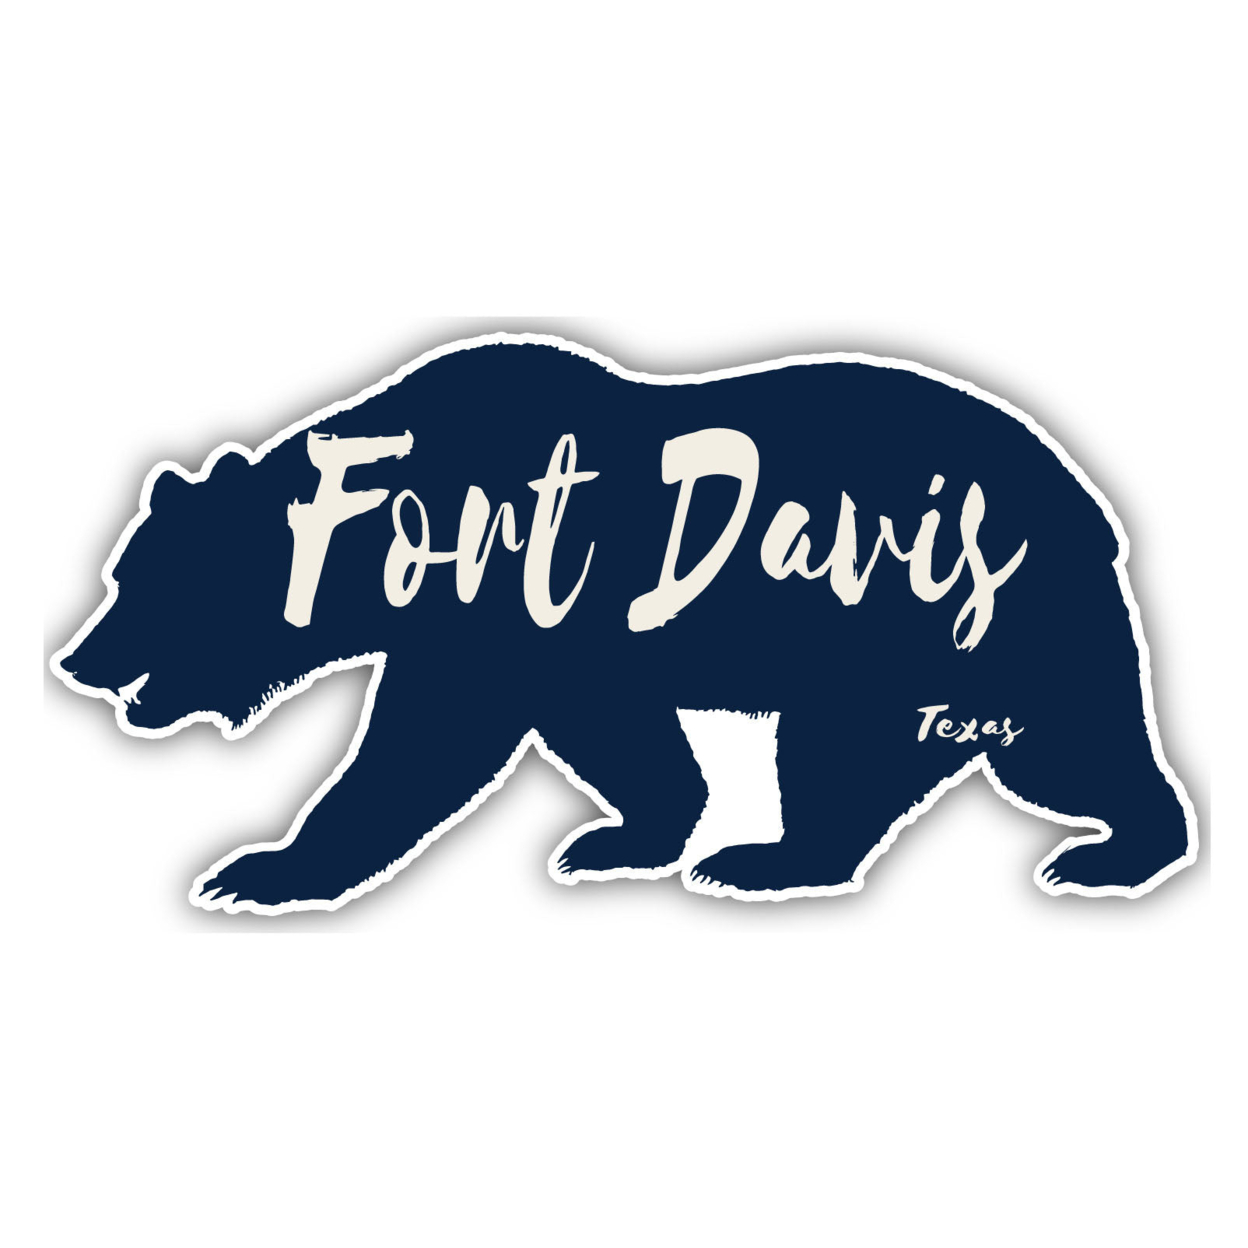 Fort Davis Texas Souvenir Decorative Stickers (Choose Theme And Size) - Single Unit, 8-Inch, Tent